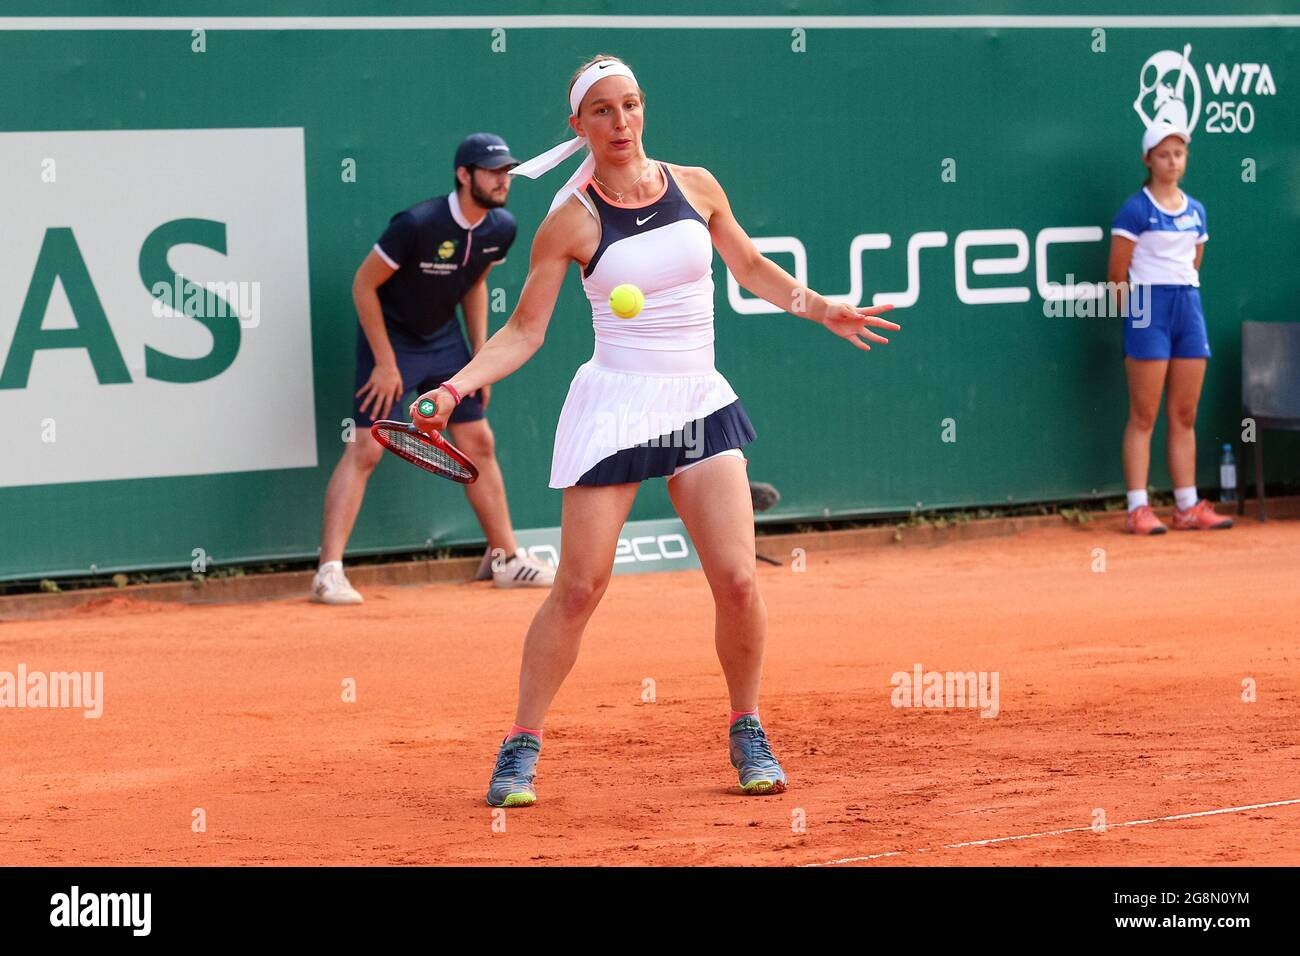 Danzica, Polonia. 21 luglio 2021. Tamara Korpatsch (GERMANIA) gioca contro  Weronika Falkowska (POLONIA) nel corso del BNP Paribas Poland Open  Tournament (categoria WTA 250) a Gdynia. (Punteggio finale 7:5, 6:1 per  Korpatsch).